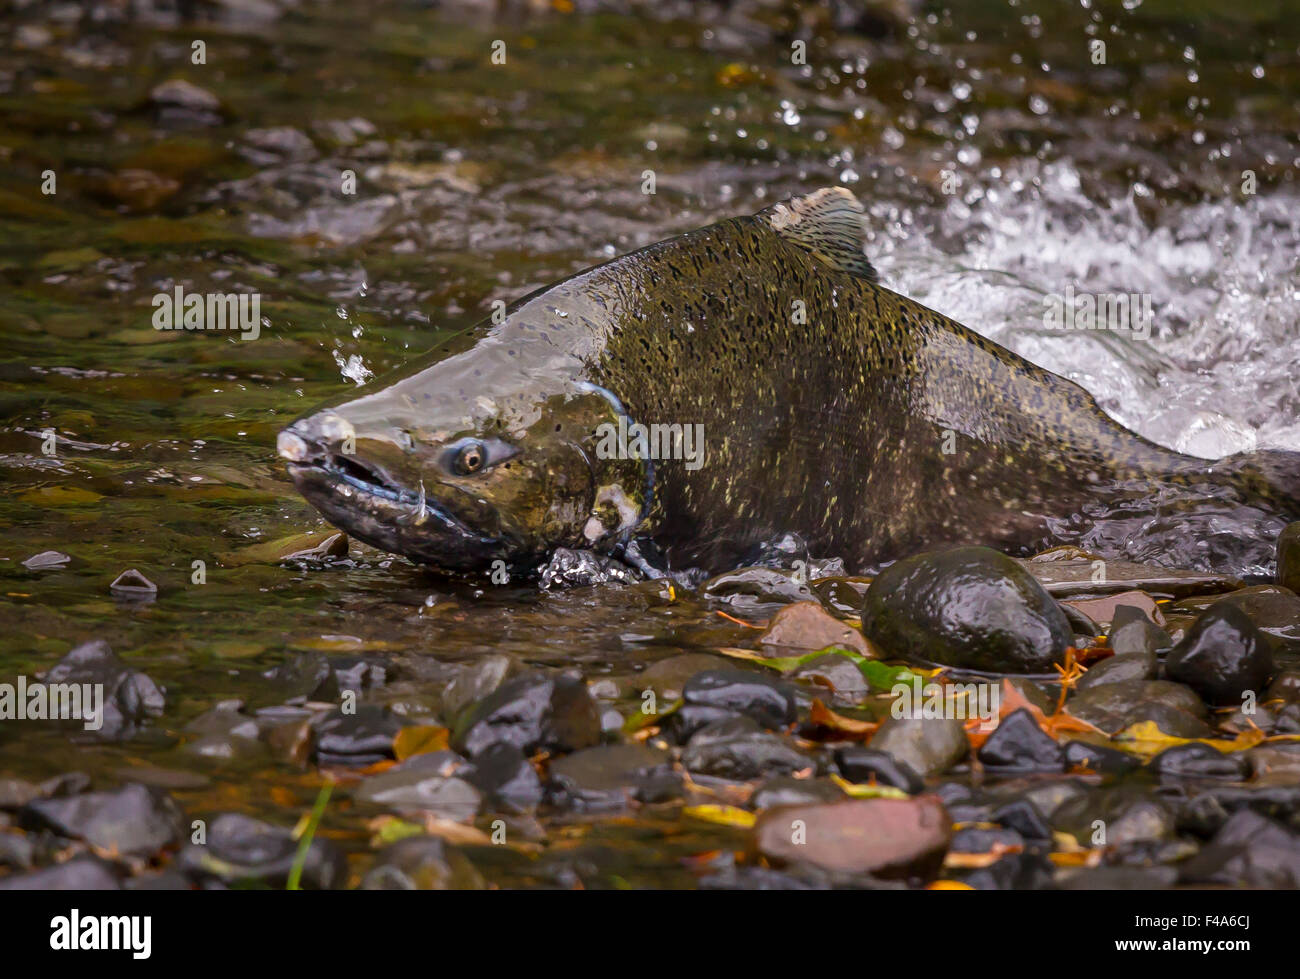 COLUMBIA RIVER GORGE, OREGON, USA - Salmon run on Eagle Creek. Fish swims up its natal river to spawn. Stock Photo